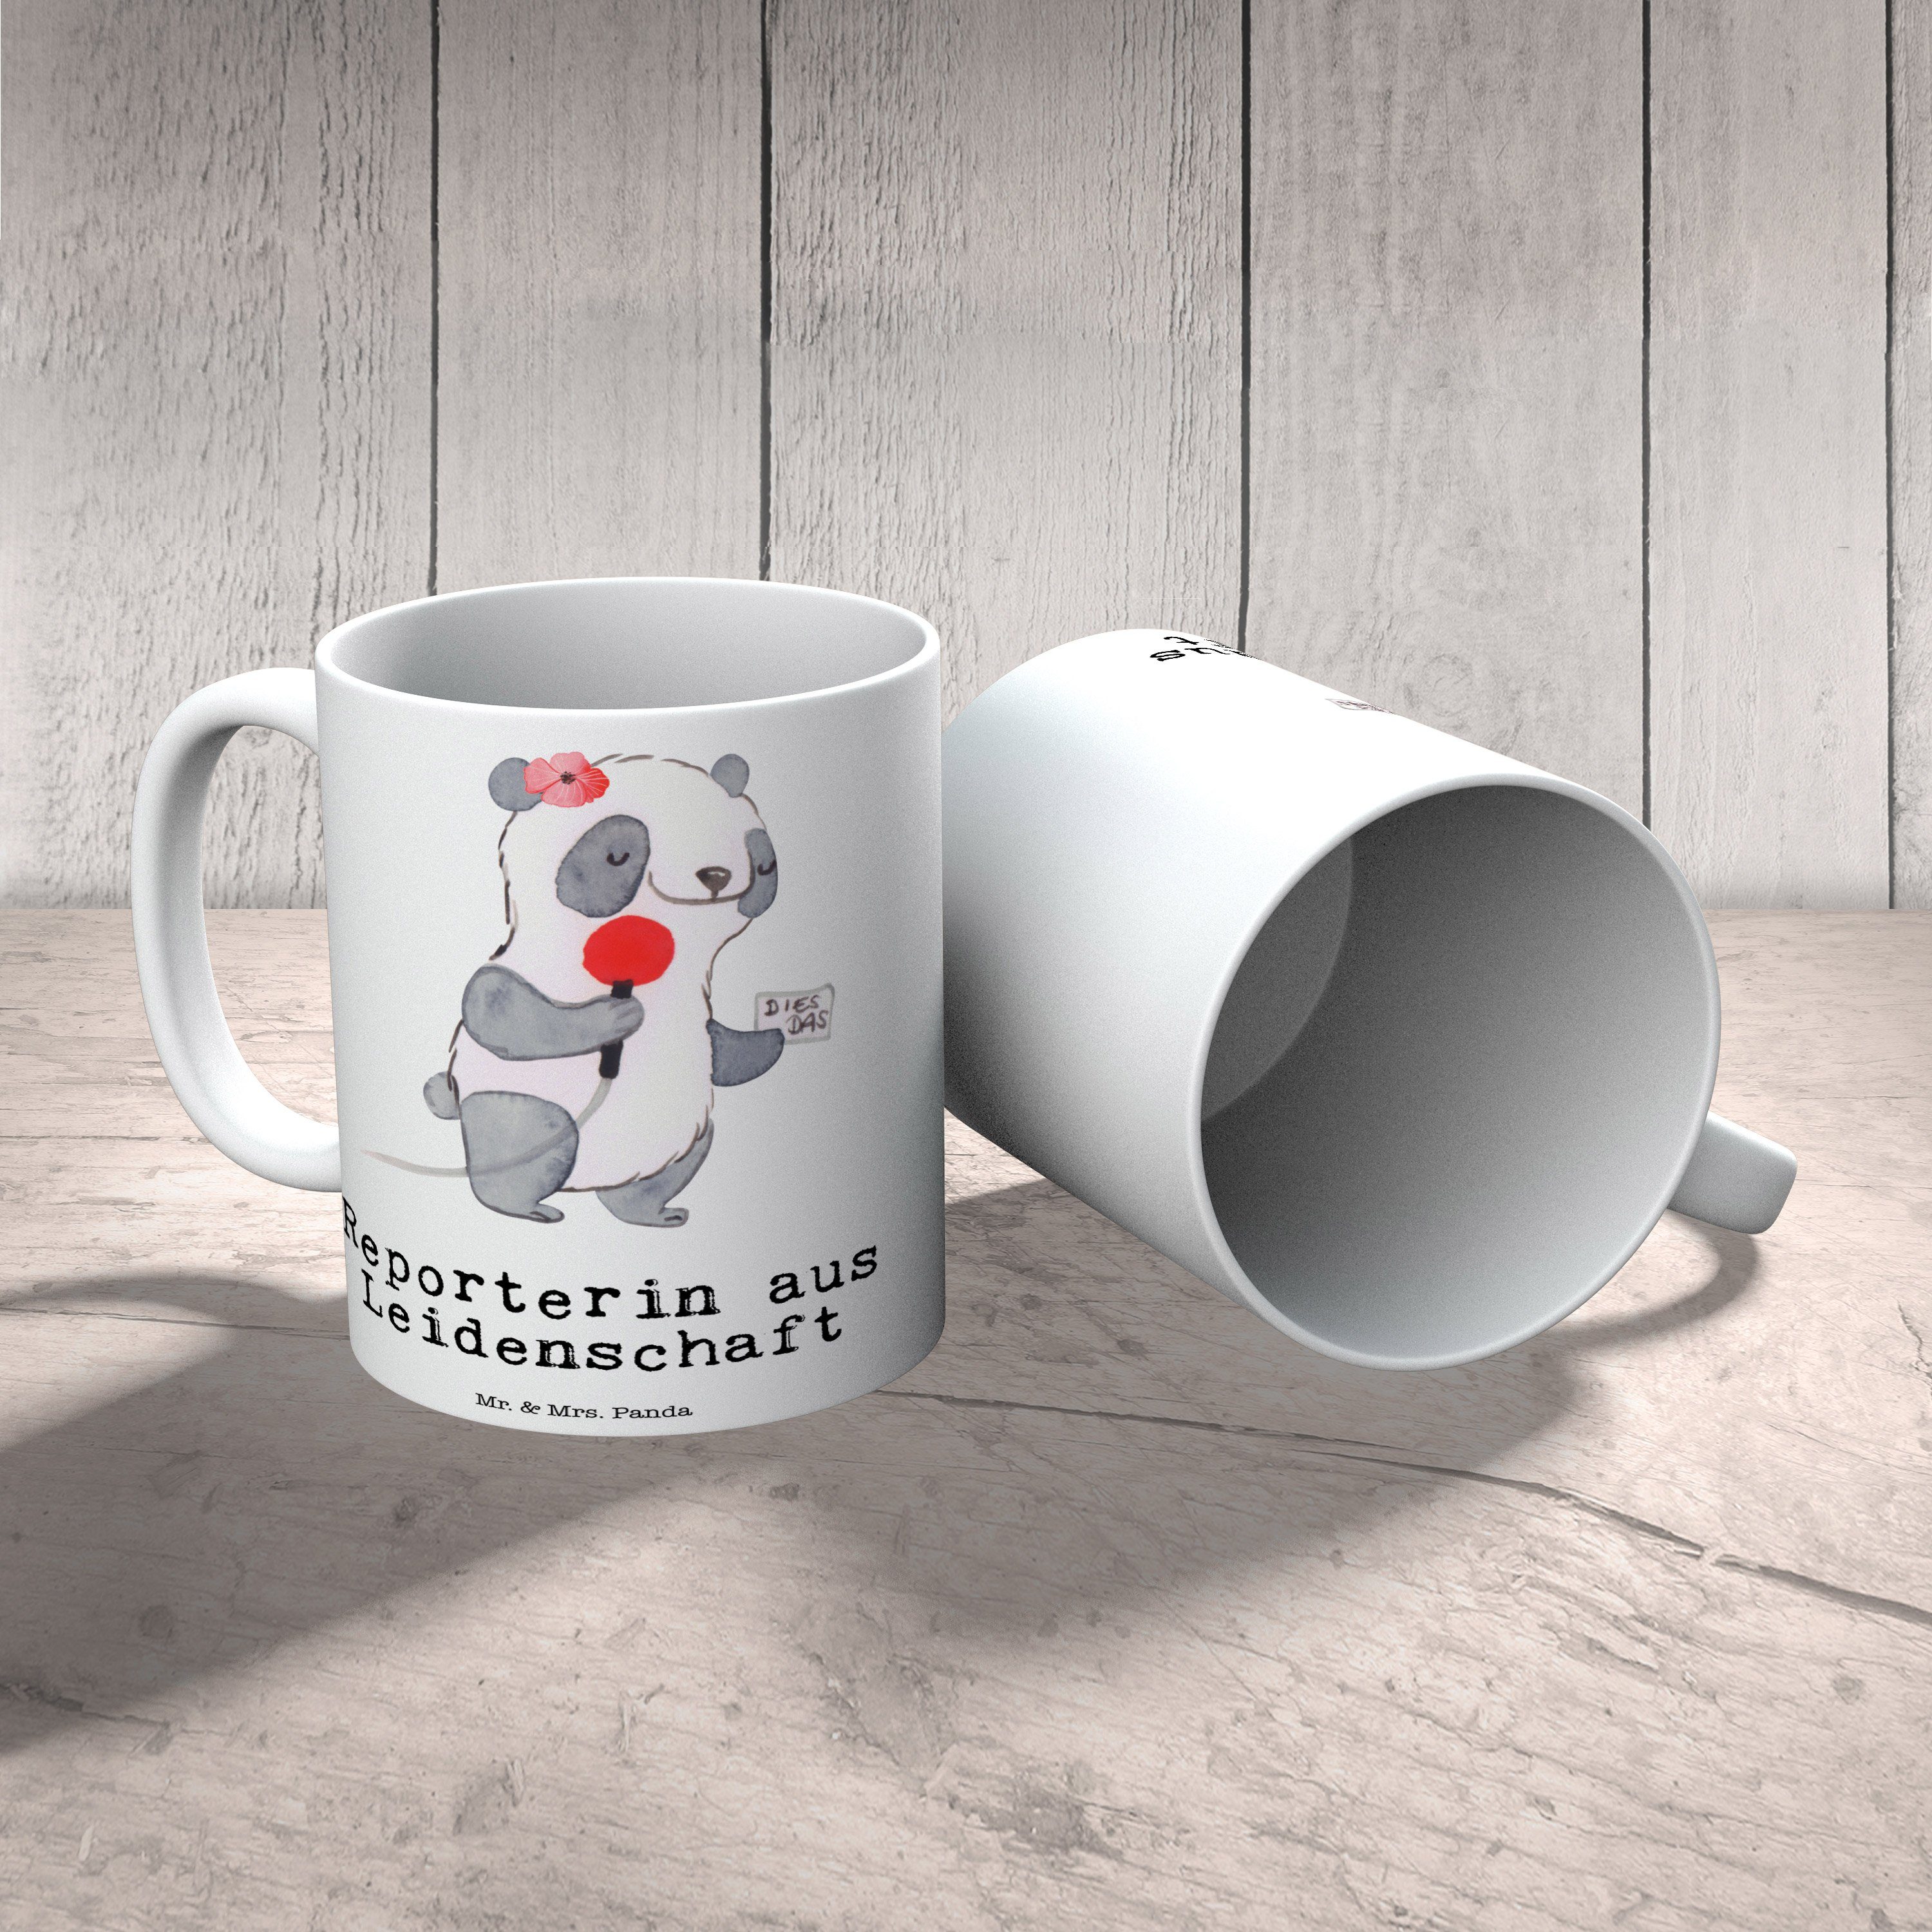 Mr. & Mrs. Leidenschaft aus Reporterin Tasse - Keramik Weiß Geschenk - Tasse, Kaffee, Panda Geschenk